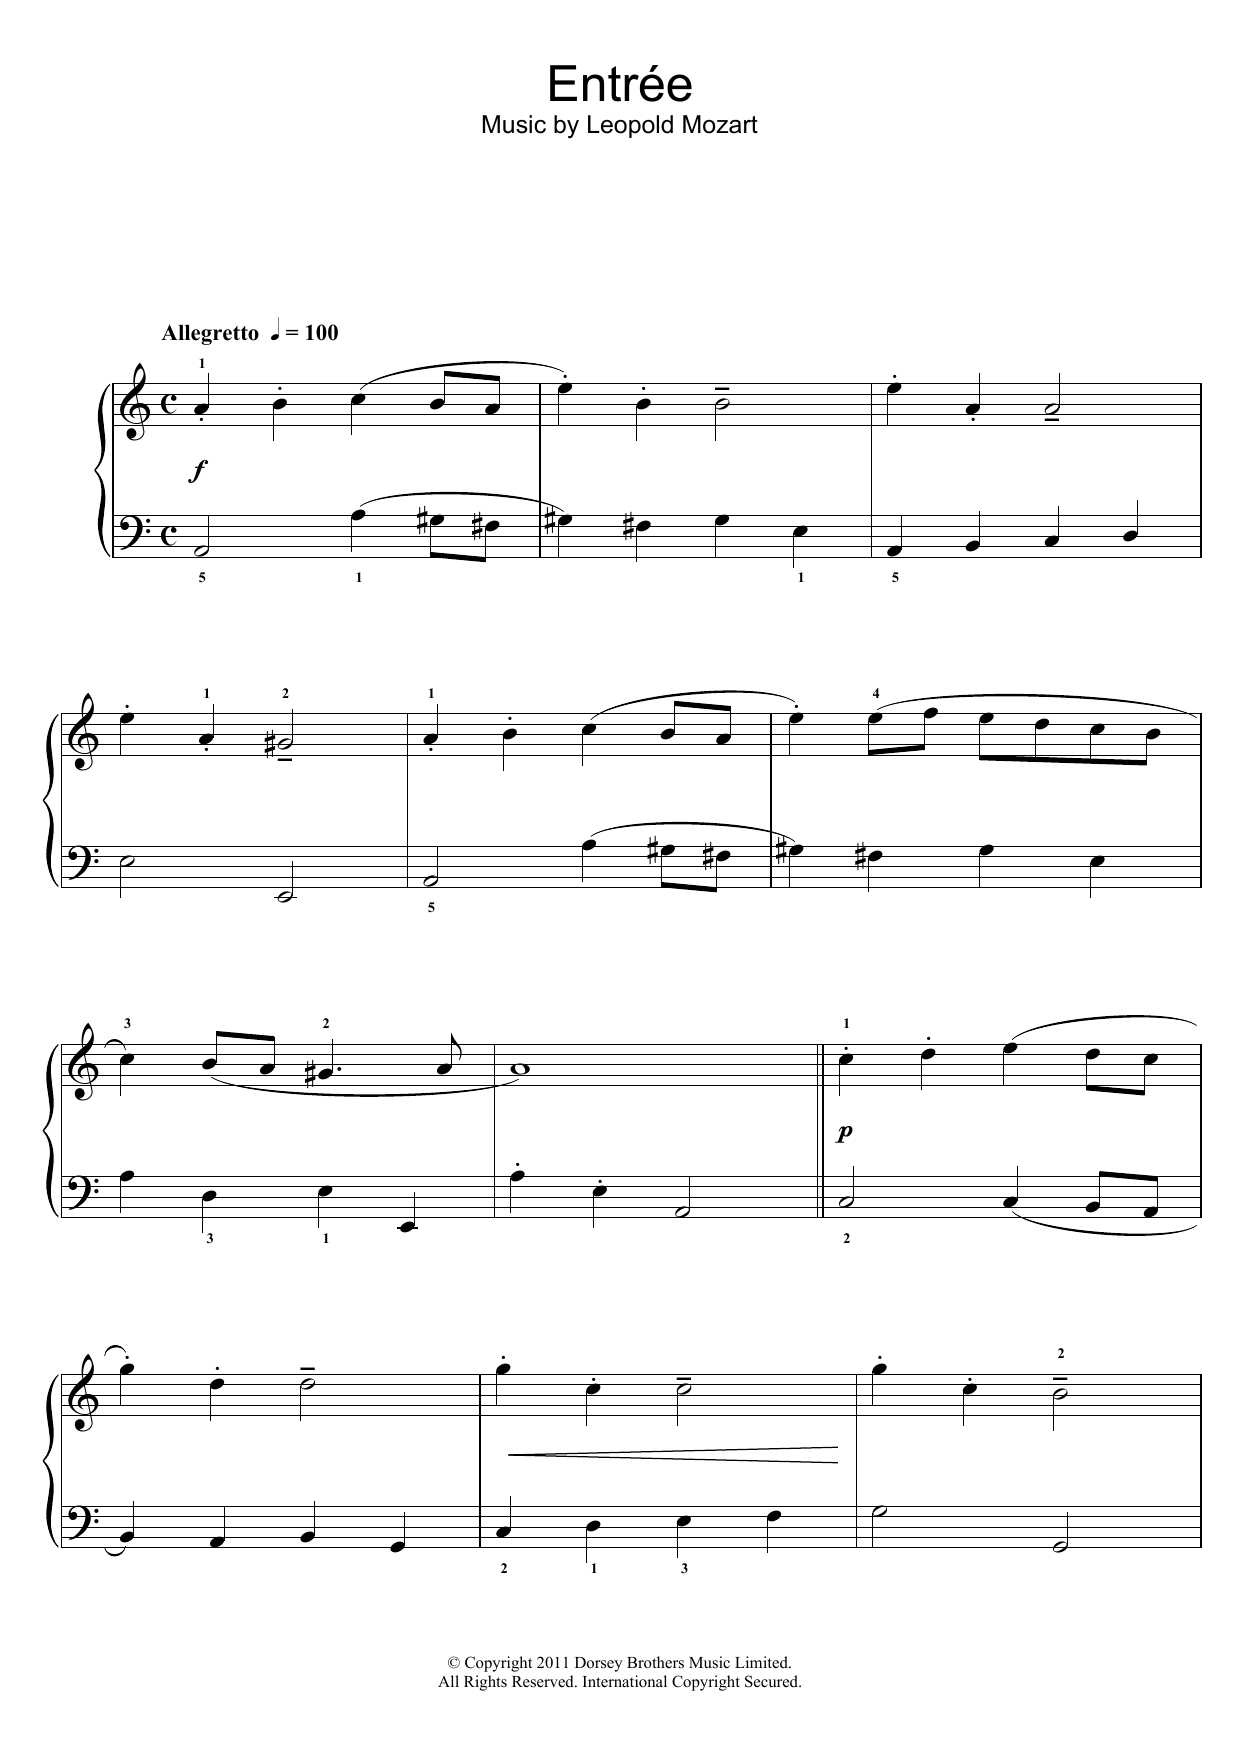 Leopold Mozart "Entree" Sheet Music Notes | Download Printable PDF